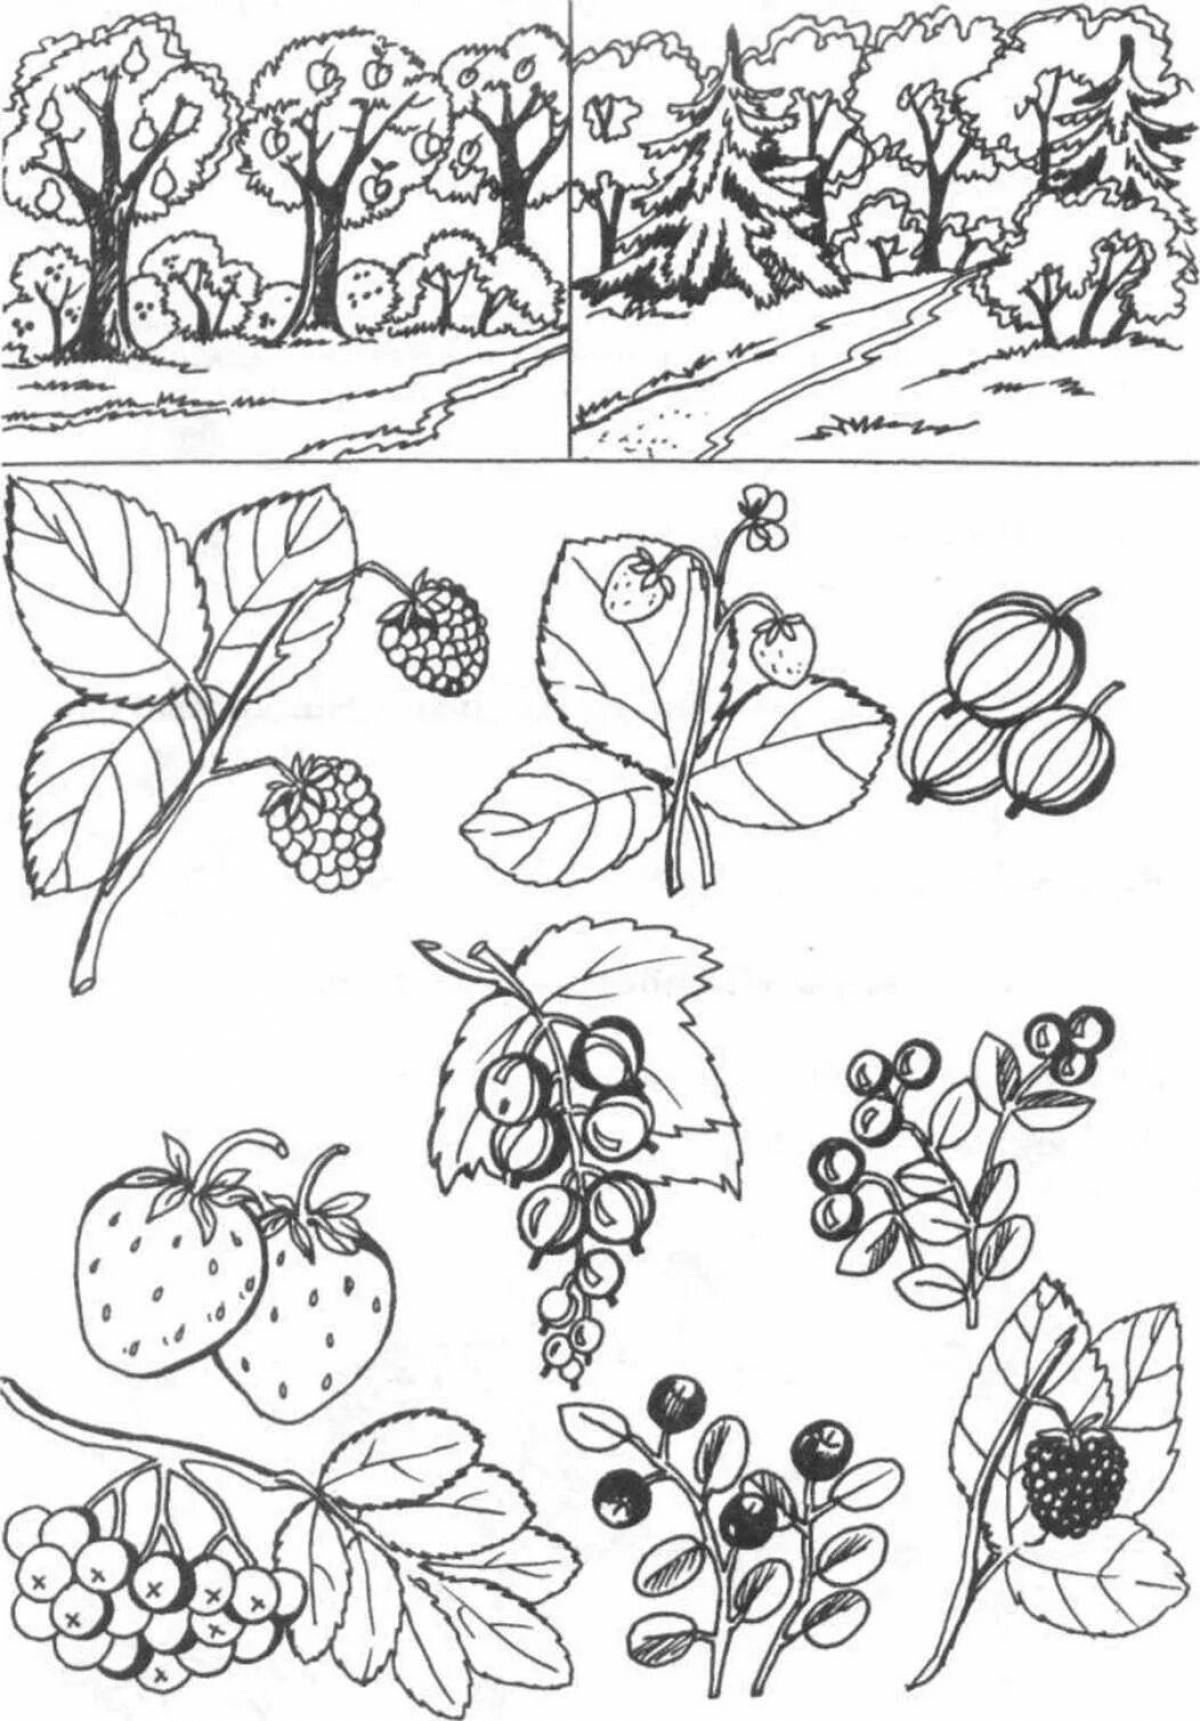 Amazing crop plants coloring page